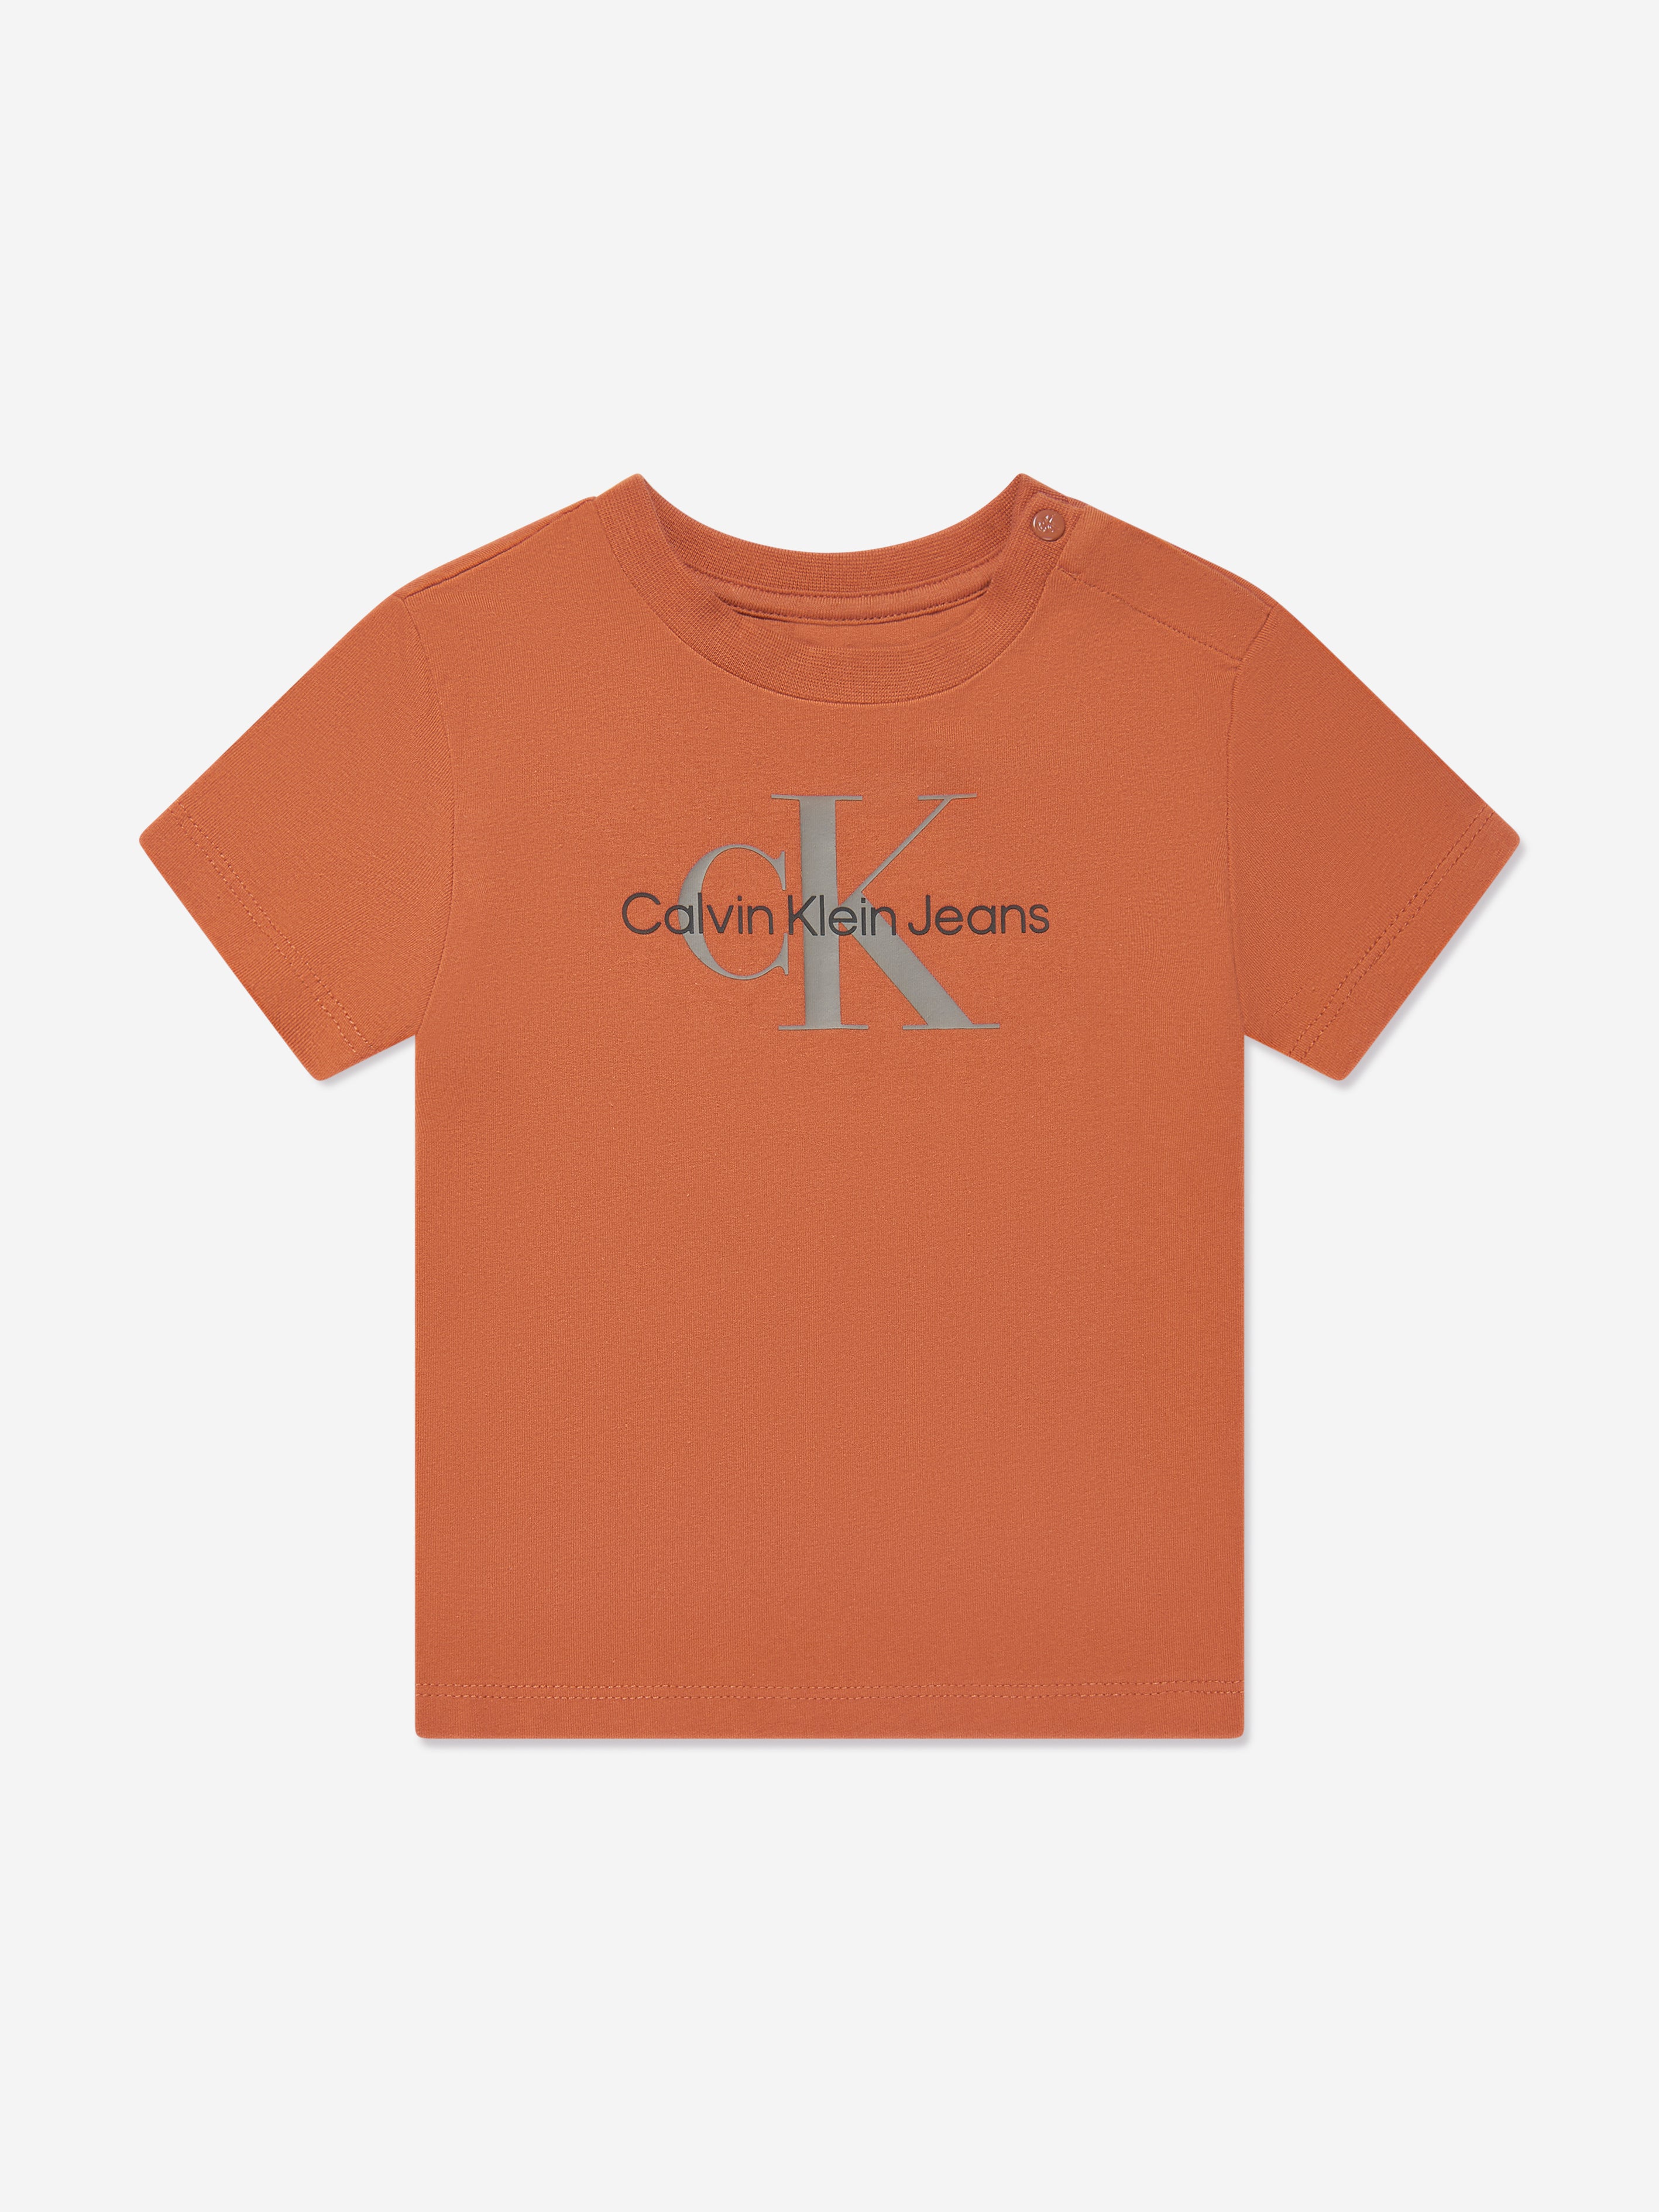 Calvin Klein Jeans Baby Monogram T-Shirt in Auburn | Childsplay Clothing